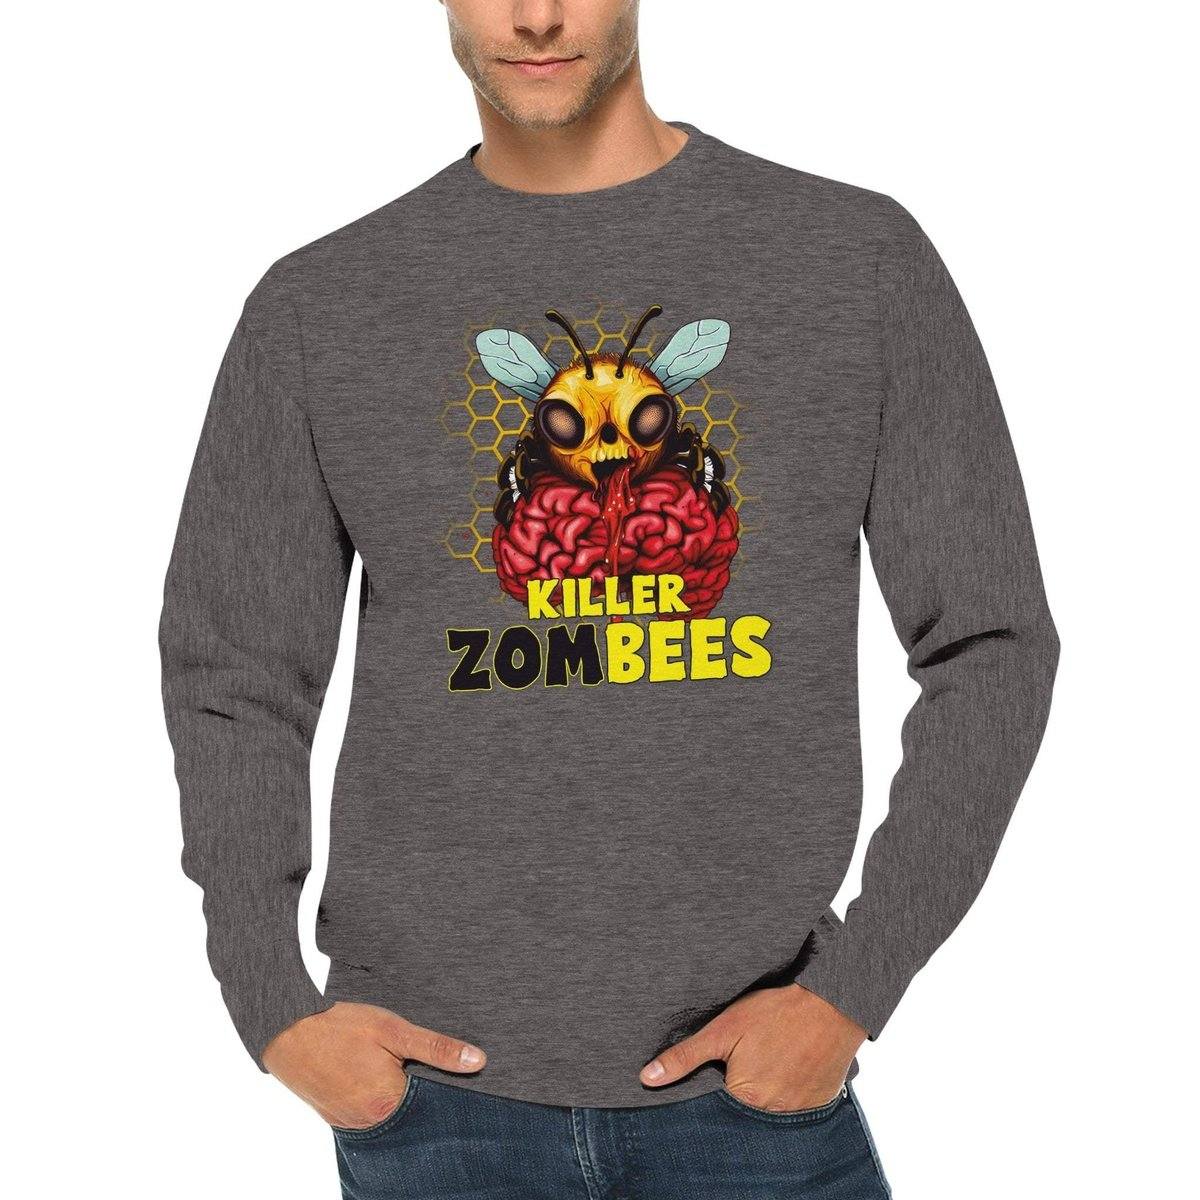 Killer Zombees - Premium Unisex Crewneck Sweatshirt Australia Online Color Charcoal Heather / S